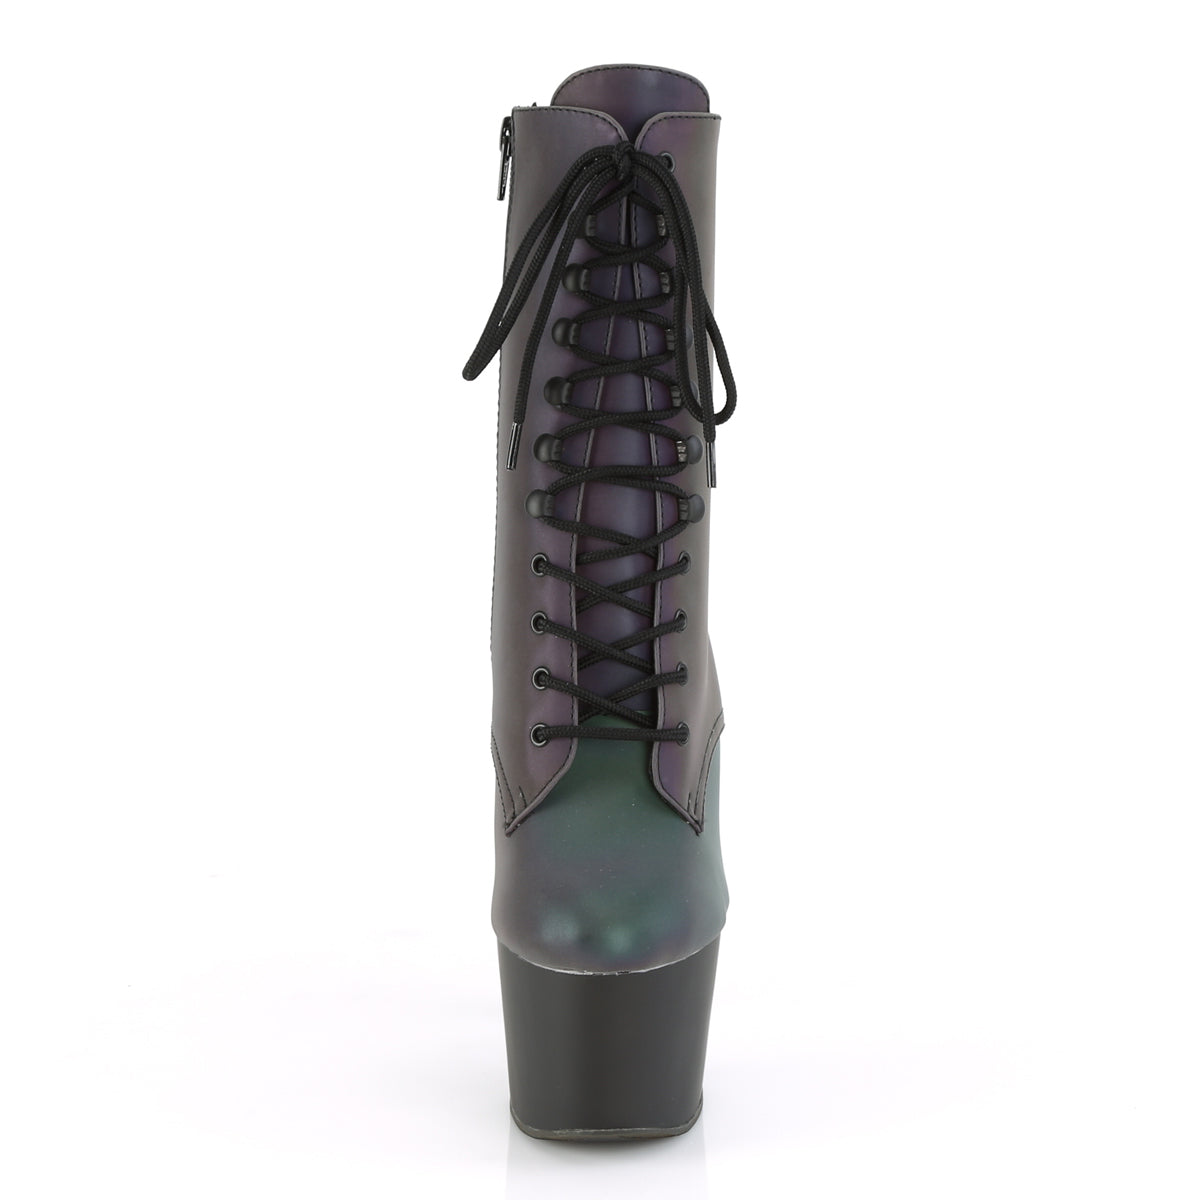 ADORE-1020REFL Green Multi Reflective Ankle Boot Pleaser